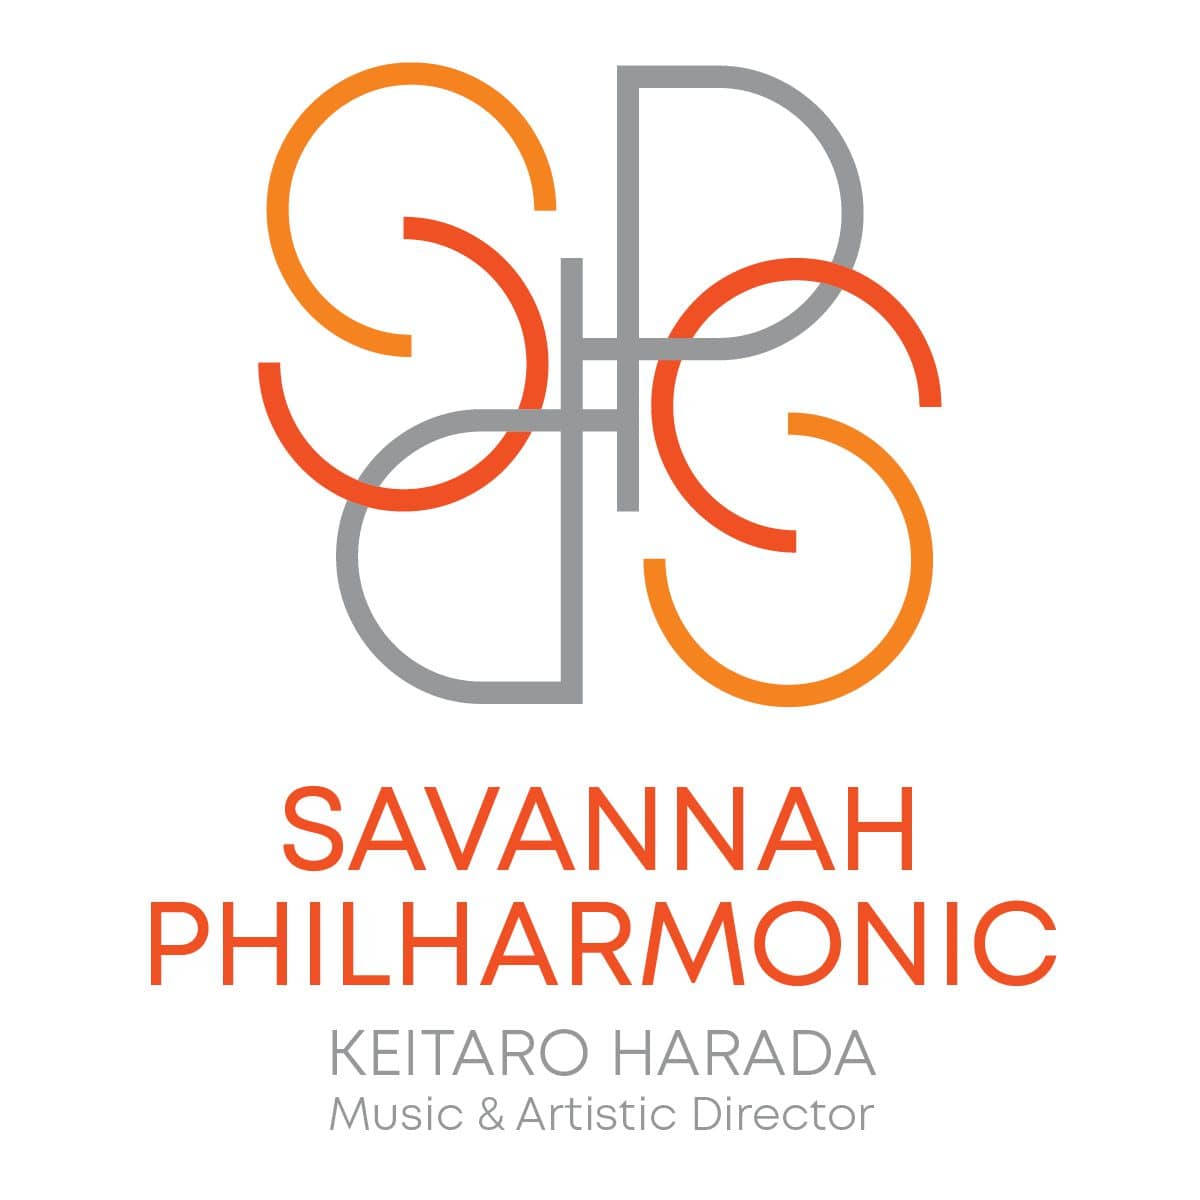 Savannah Philharmonic Corporation